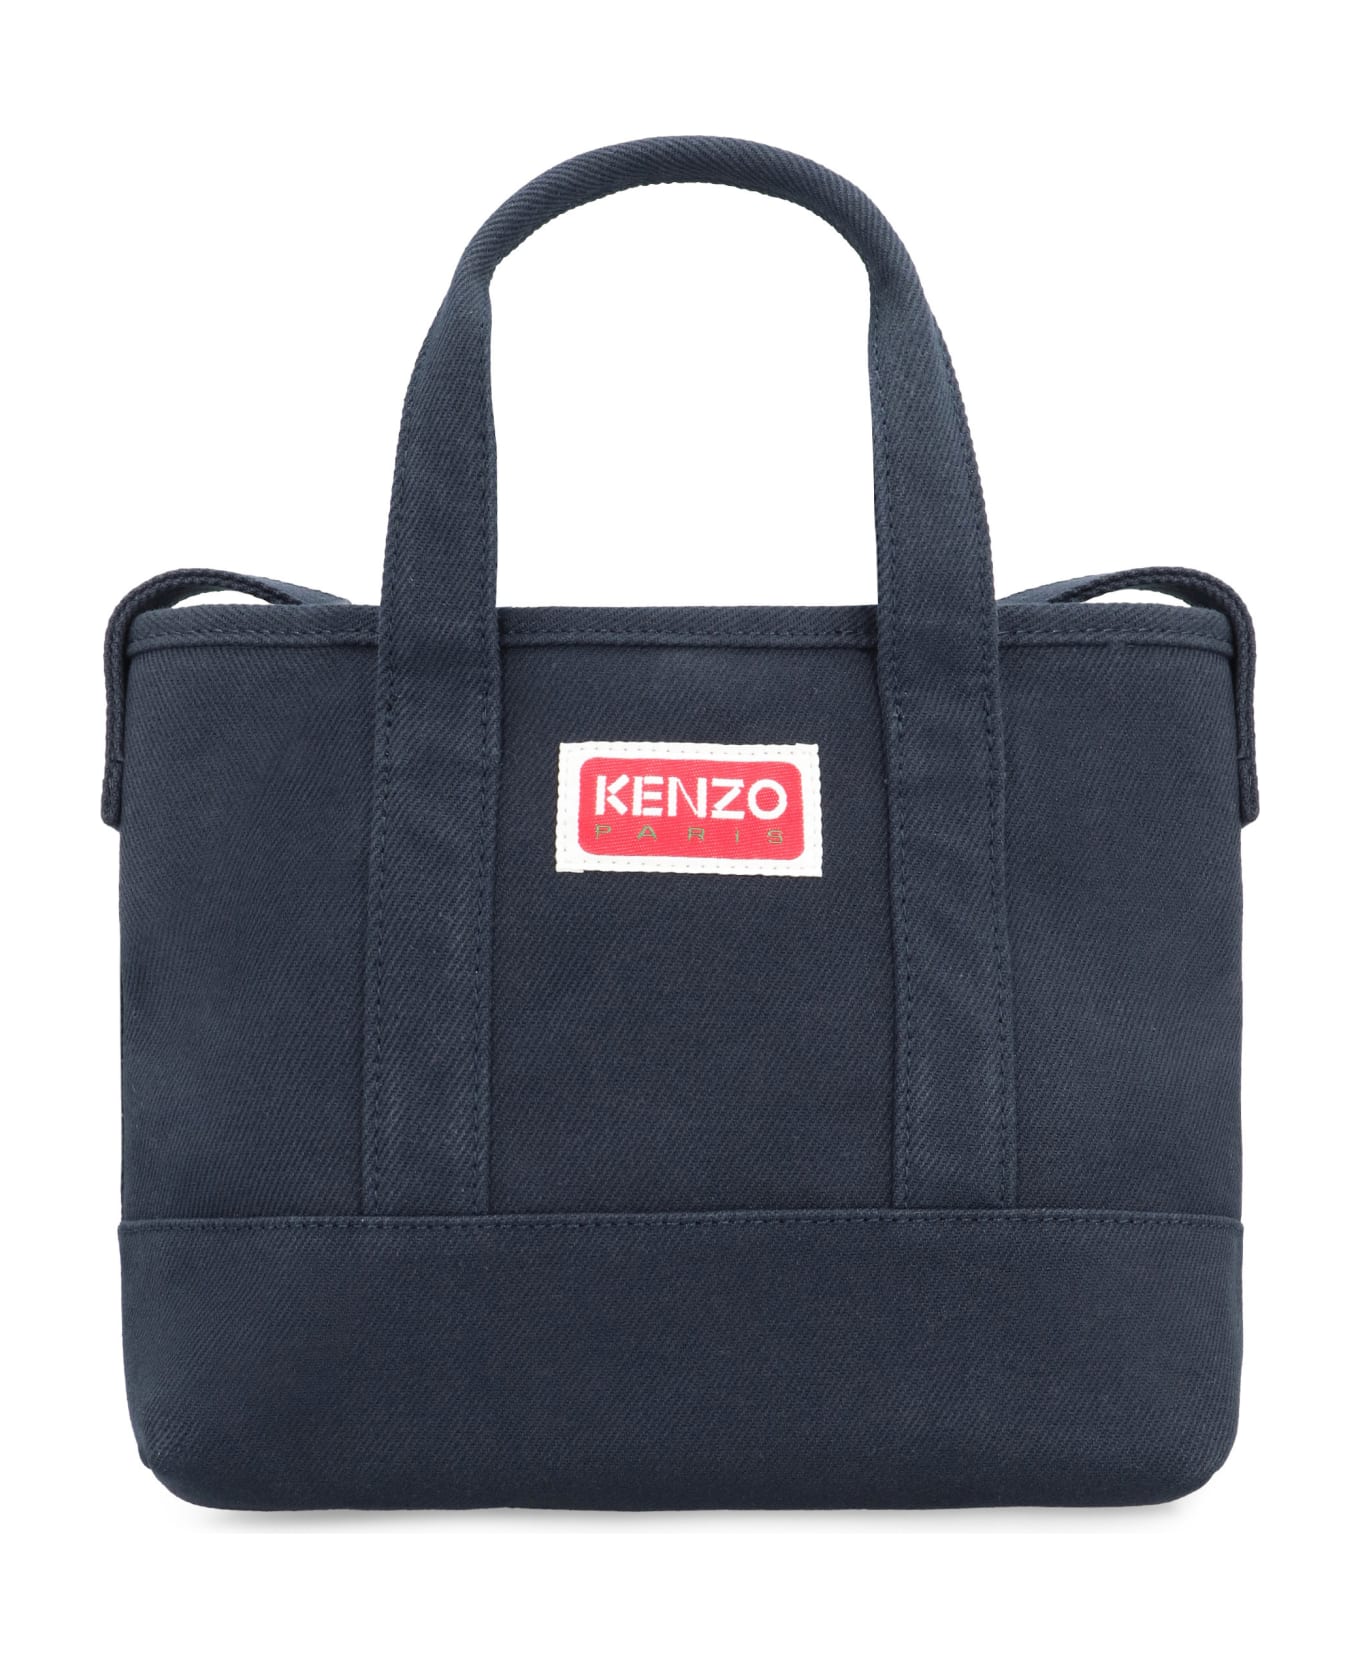 Kenzo Tote Bag - blue トートバッグ